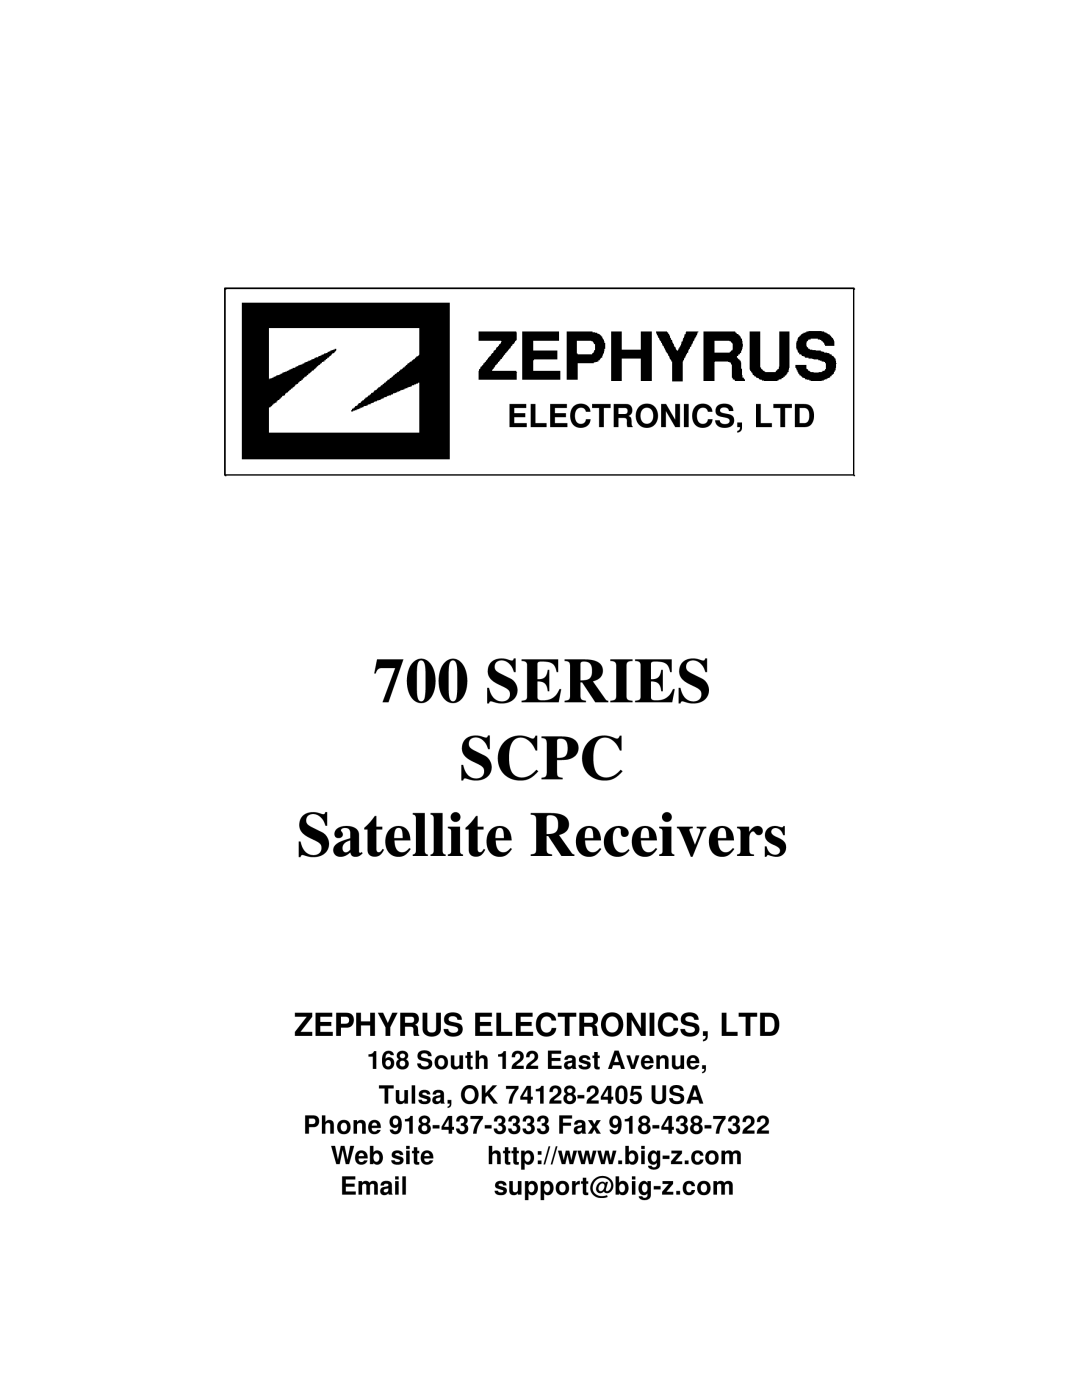 Zephyr manual South 122 East Avenue Tulsa, OK 74128-2405USA, Phone 918-437-3333Fax, 700SERIES SCPC Satellite Receivers 